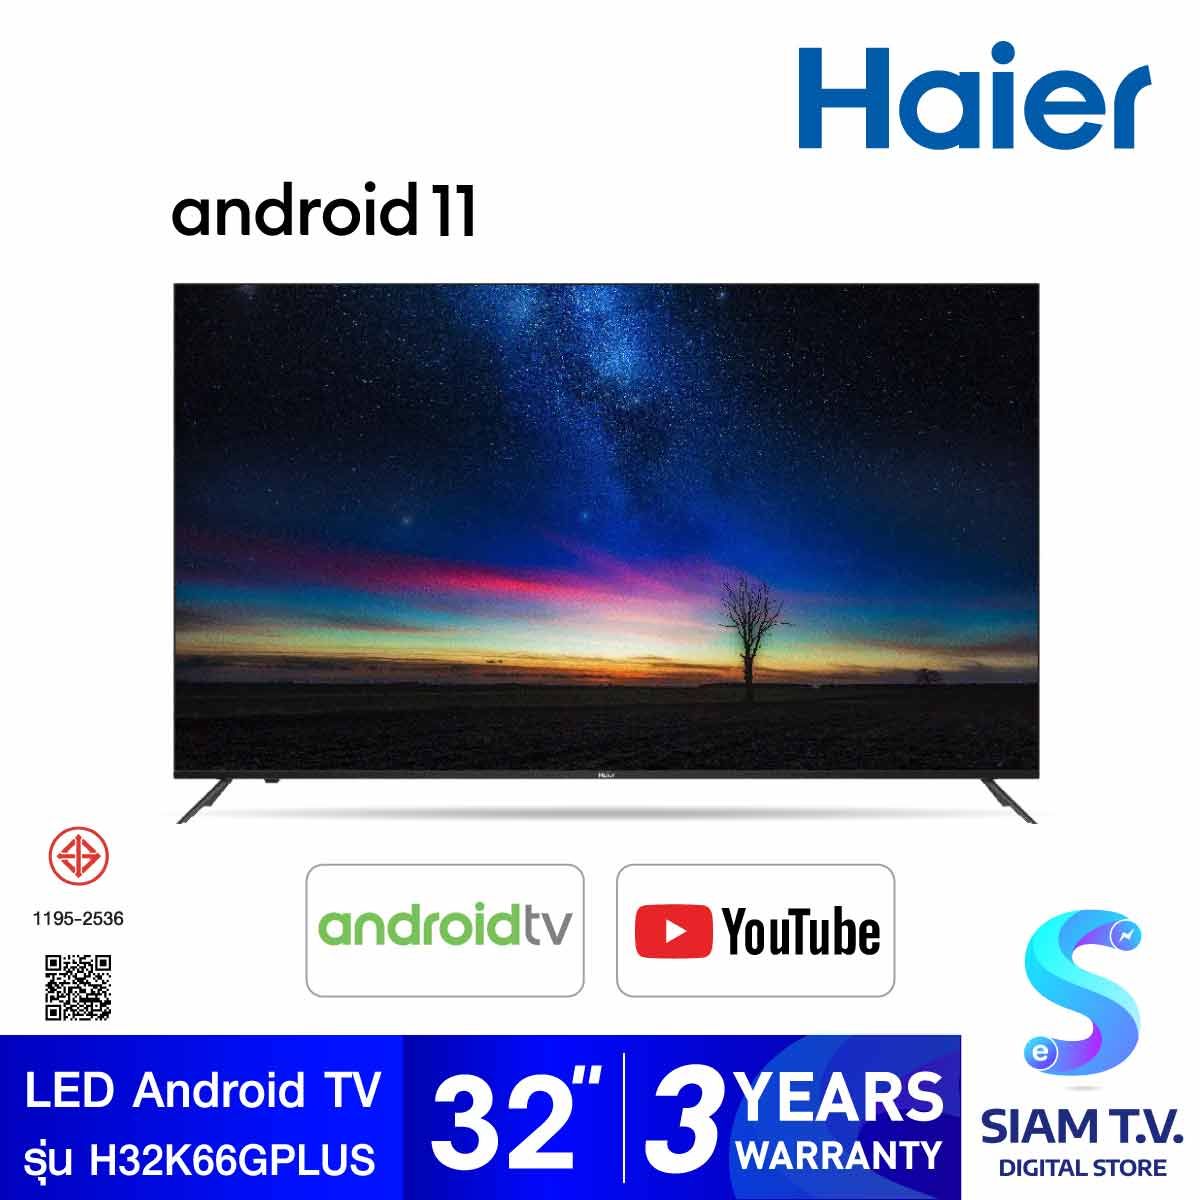 HAIER LED Andriod TV  รุ่น H32K66G PLUS สมาร์ททีวี Andriod 11 ขนาด 32 นิ้ว